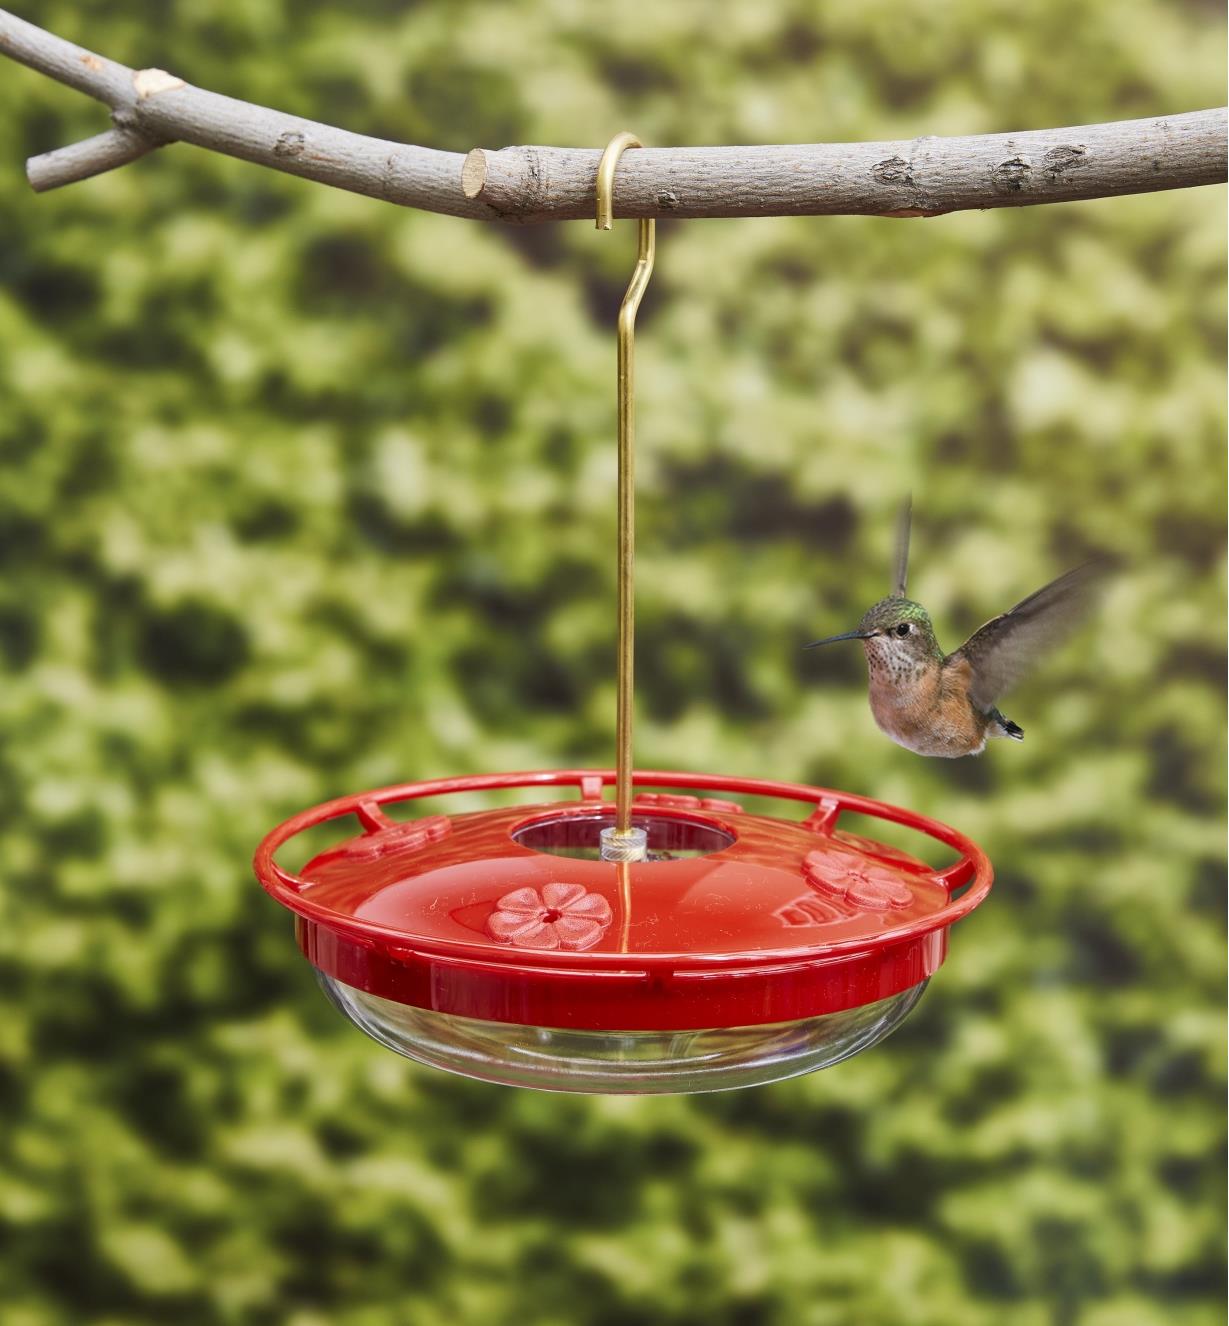 A hummingbird hovers over a hanging hummingbird feeder